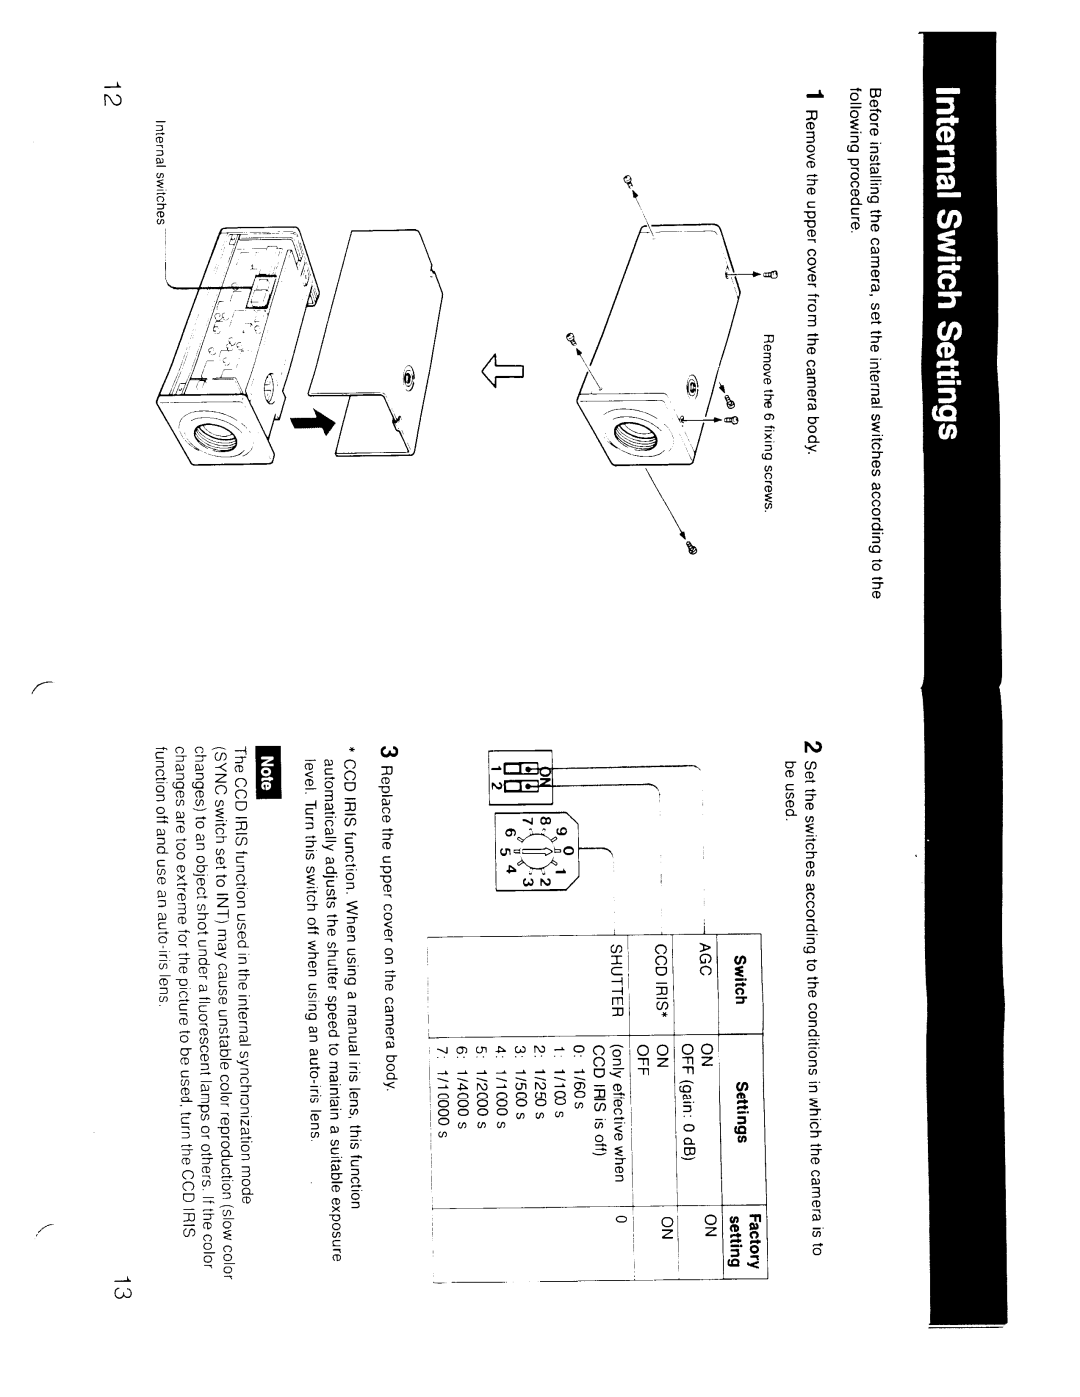 Sony SSC-C354 manual 